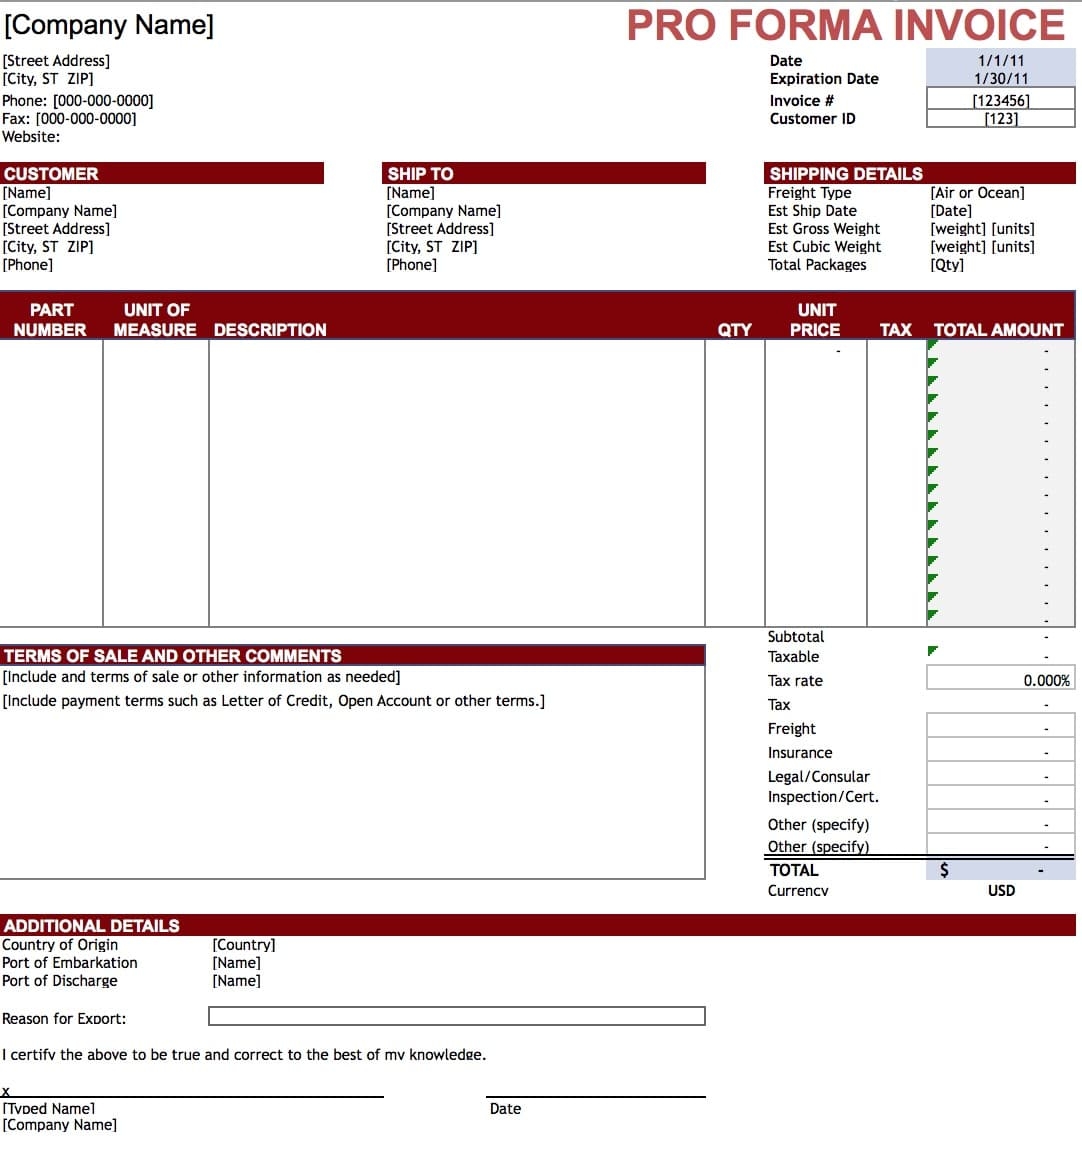 free pro forma invoice template excel pdf word doc sample proforma invoice doc